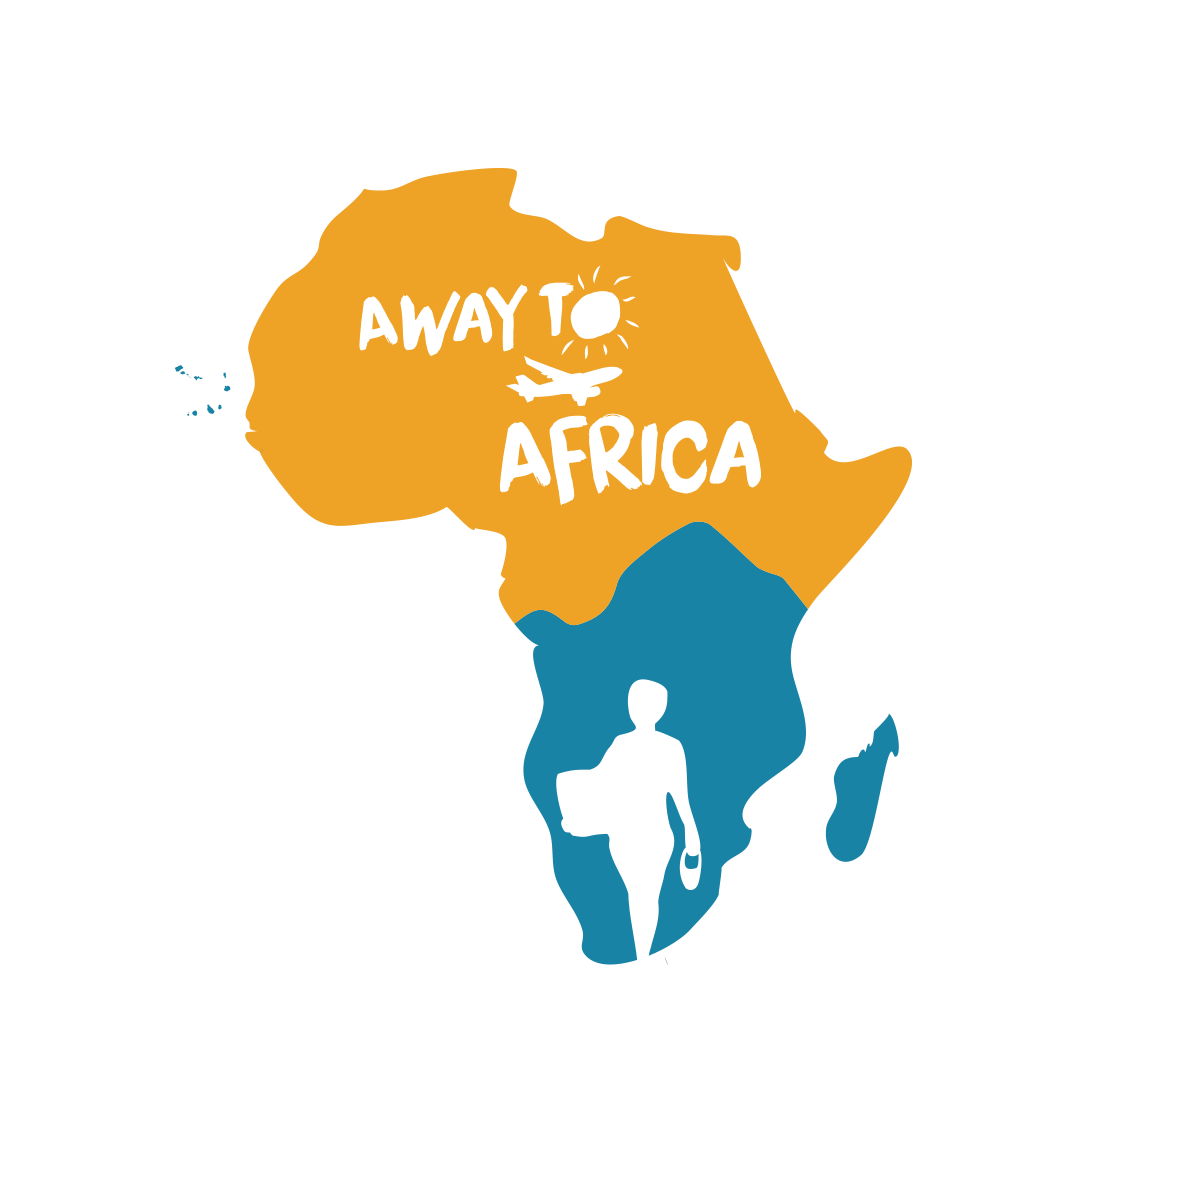 Africa text. Африка. Африка надпись. Африканский логотип. Африка материк.